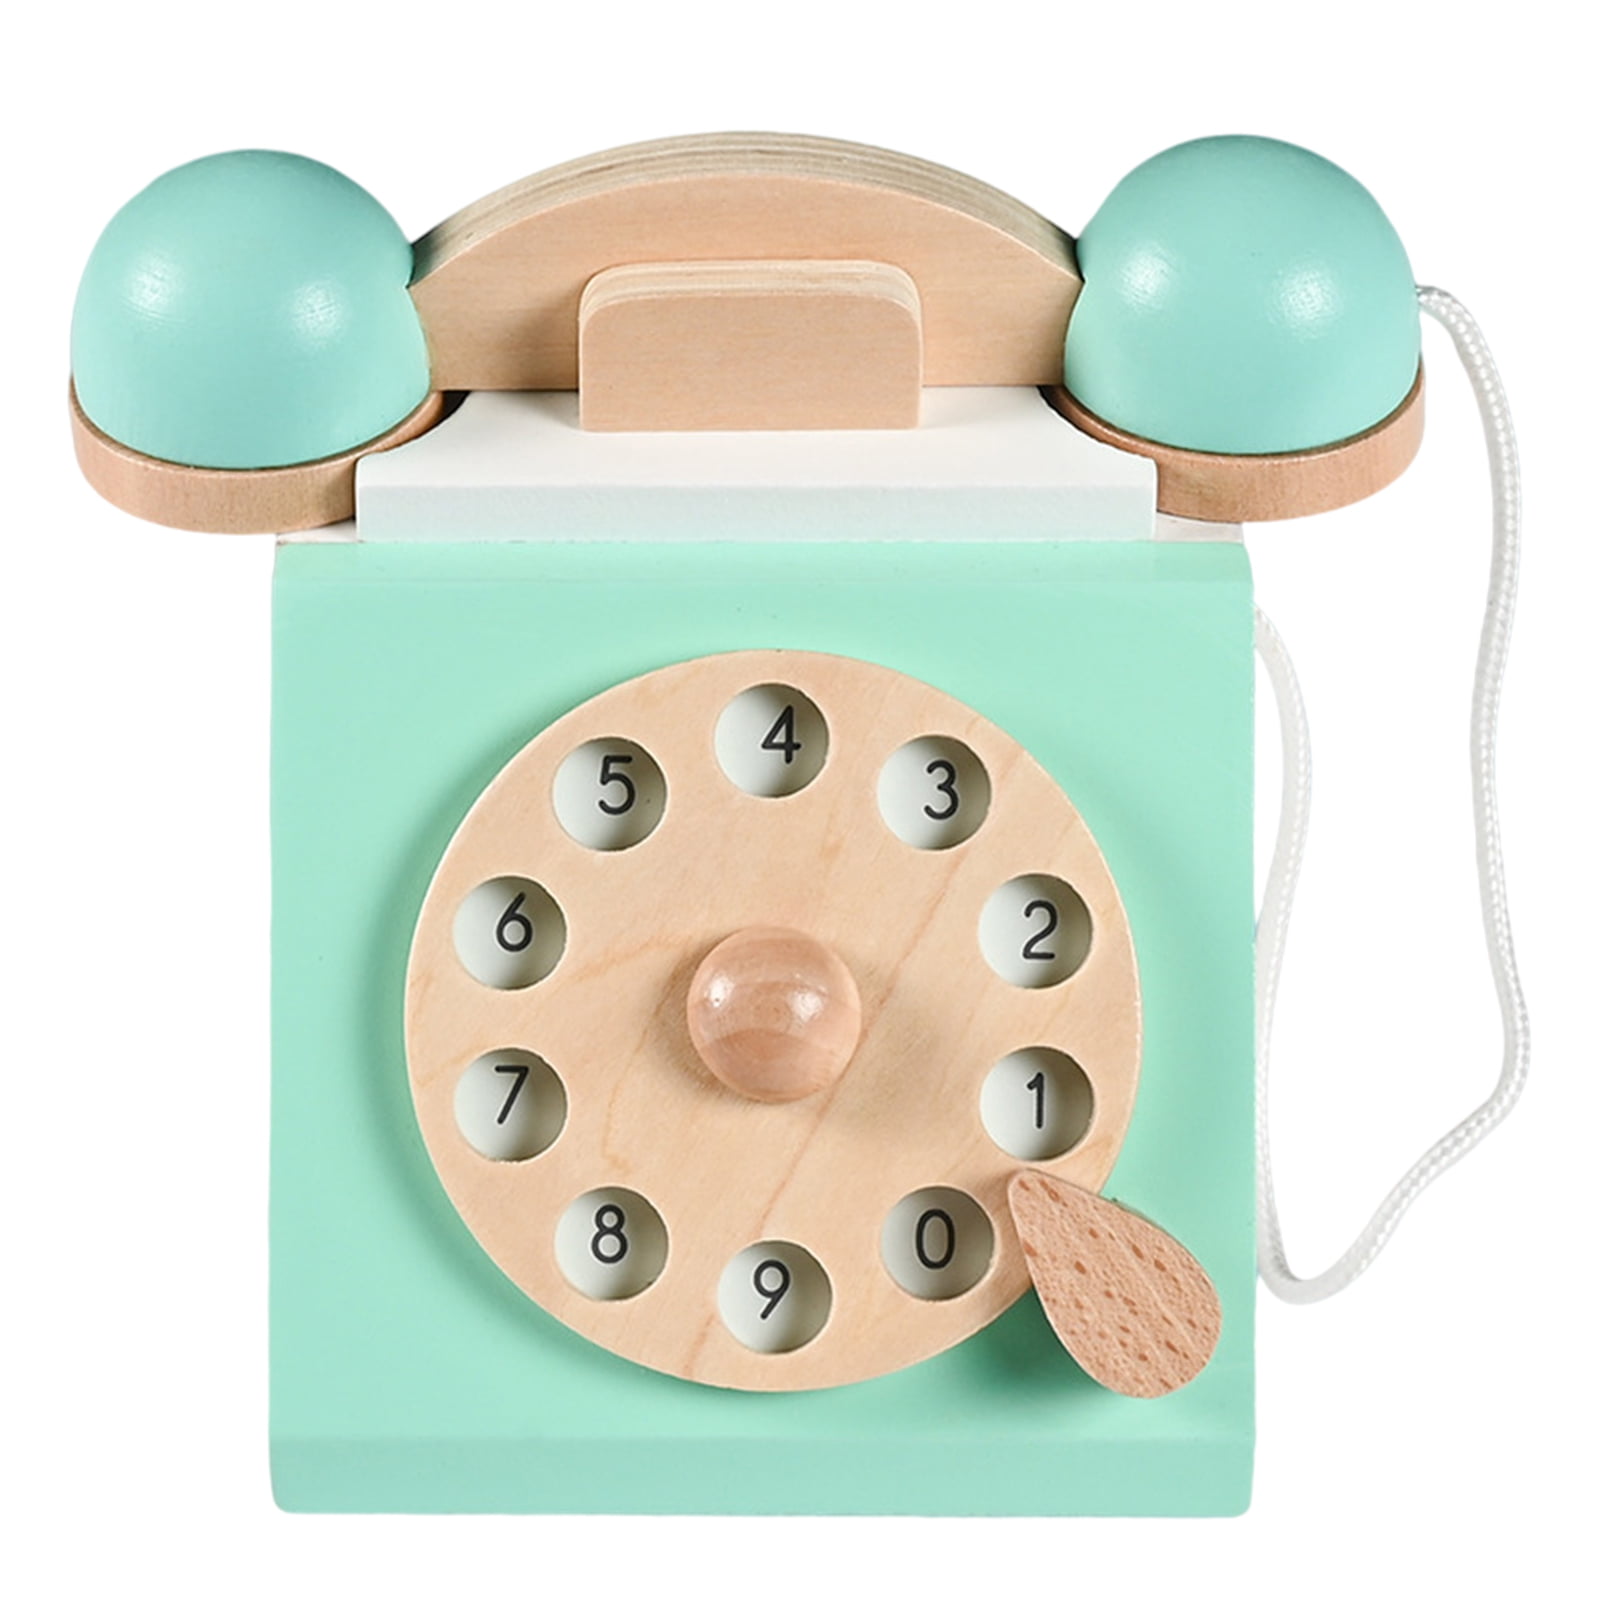 Wooden Telephone Play Phone Children's Learning & Development Toys 